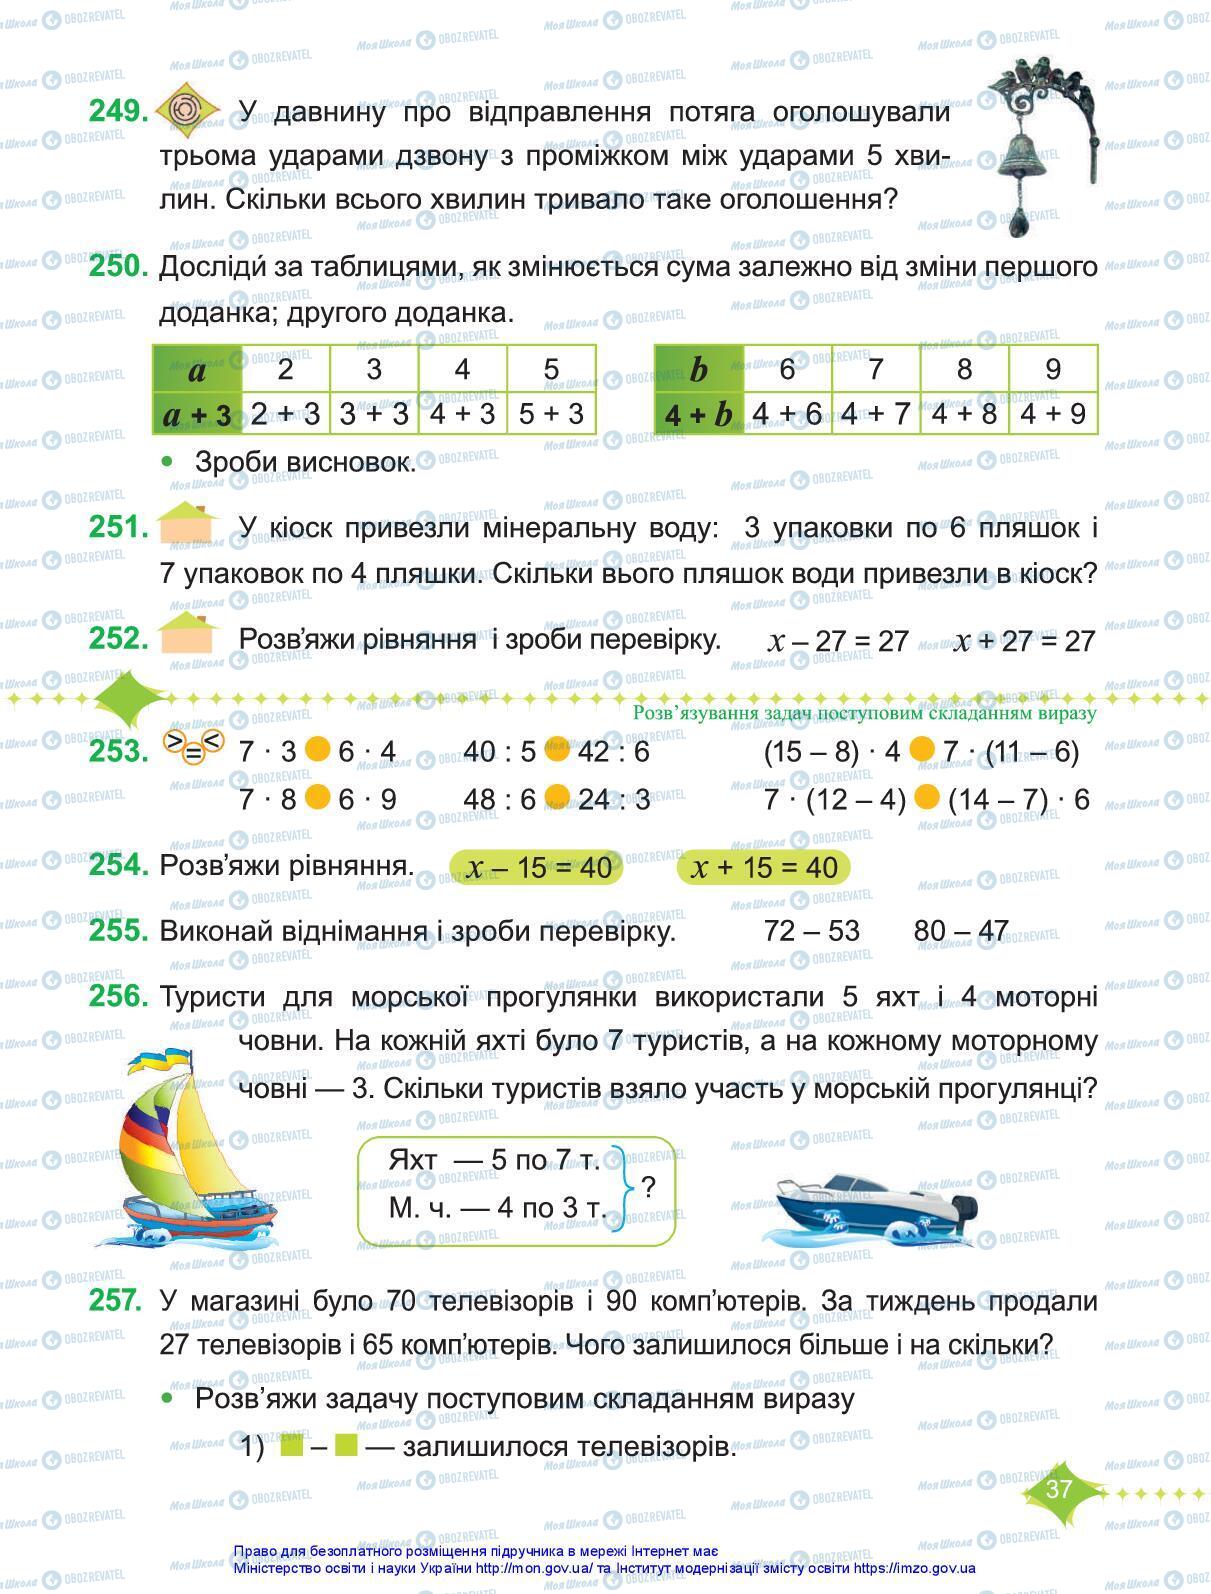 Учебники Математика 3 класс страница 37